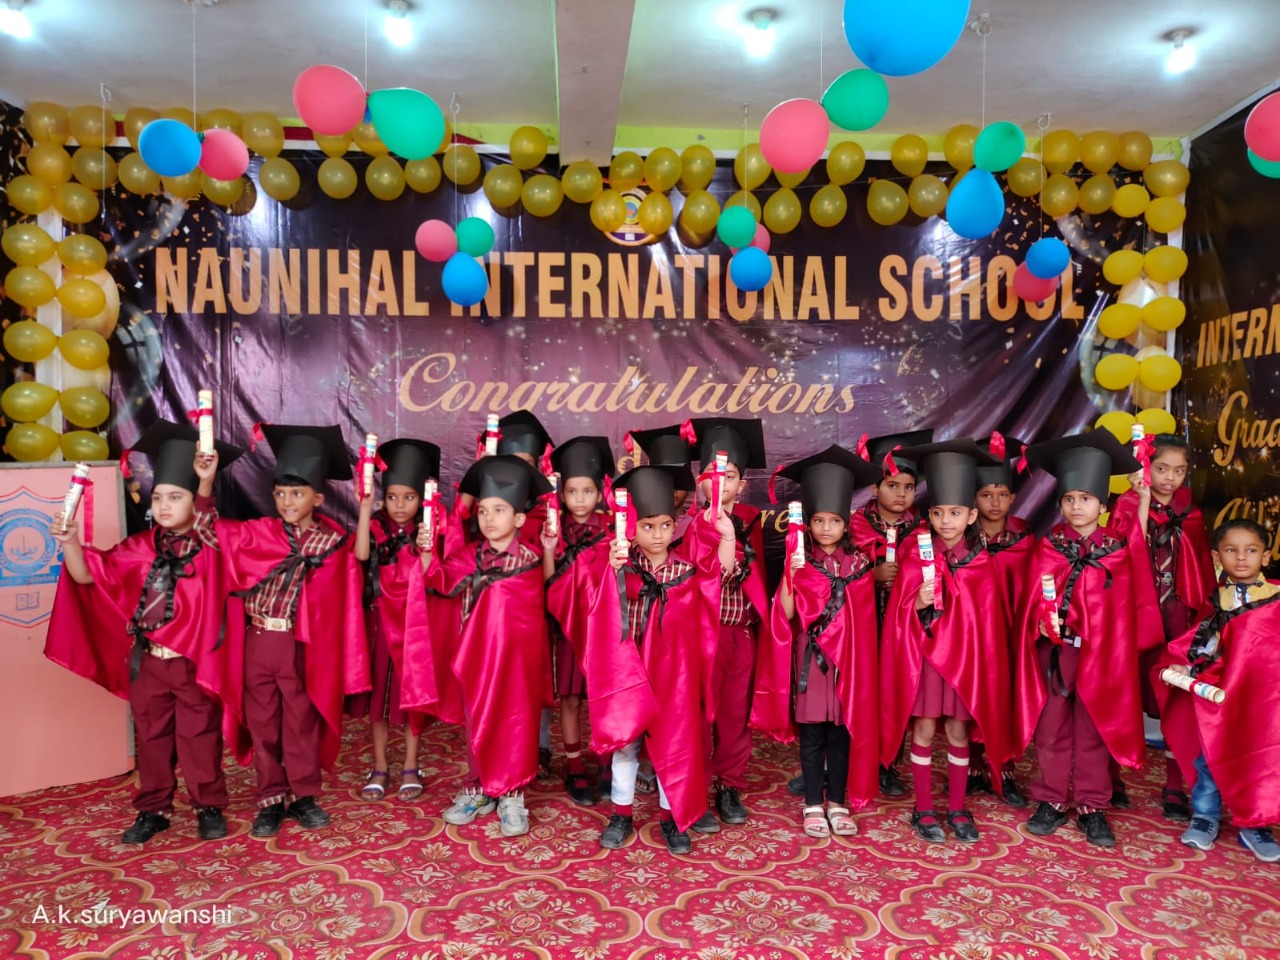 NAUNIHAL INTERNATIONAL SCHOOL